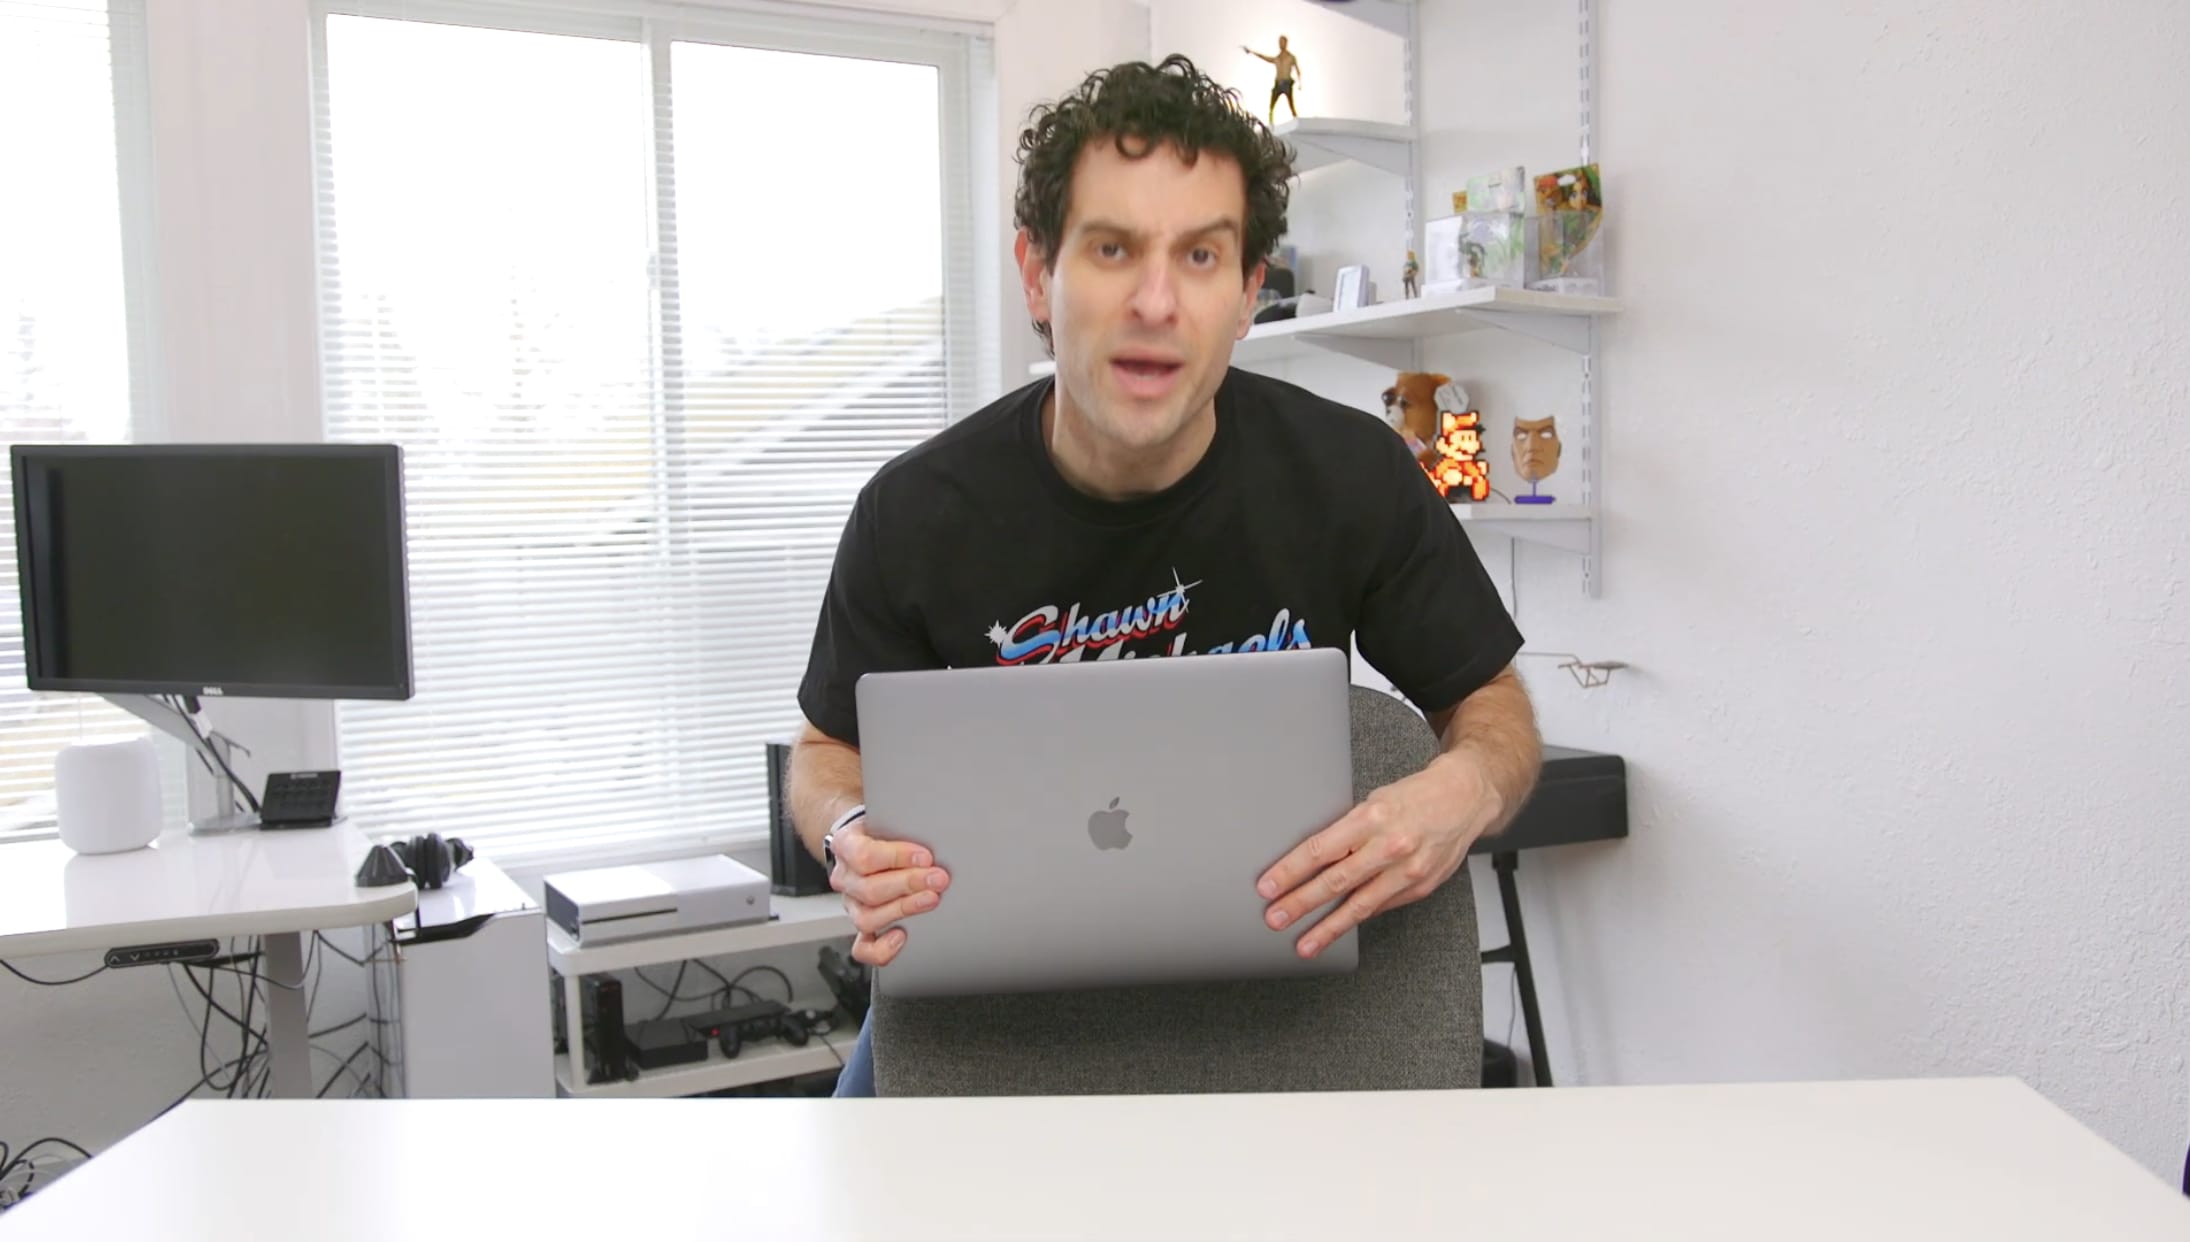 2018 MacBook Pro problems: The CultCast host Erfon Elijah's got a bone to pick with the new Apple laptop.